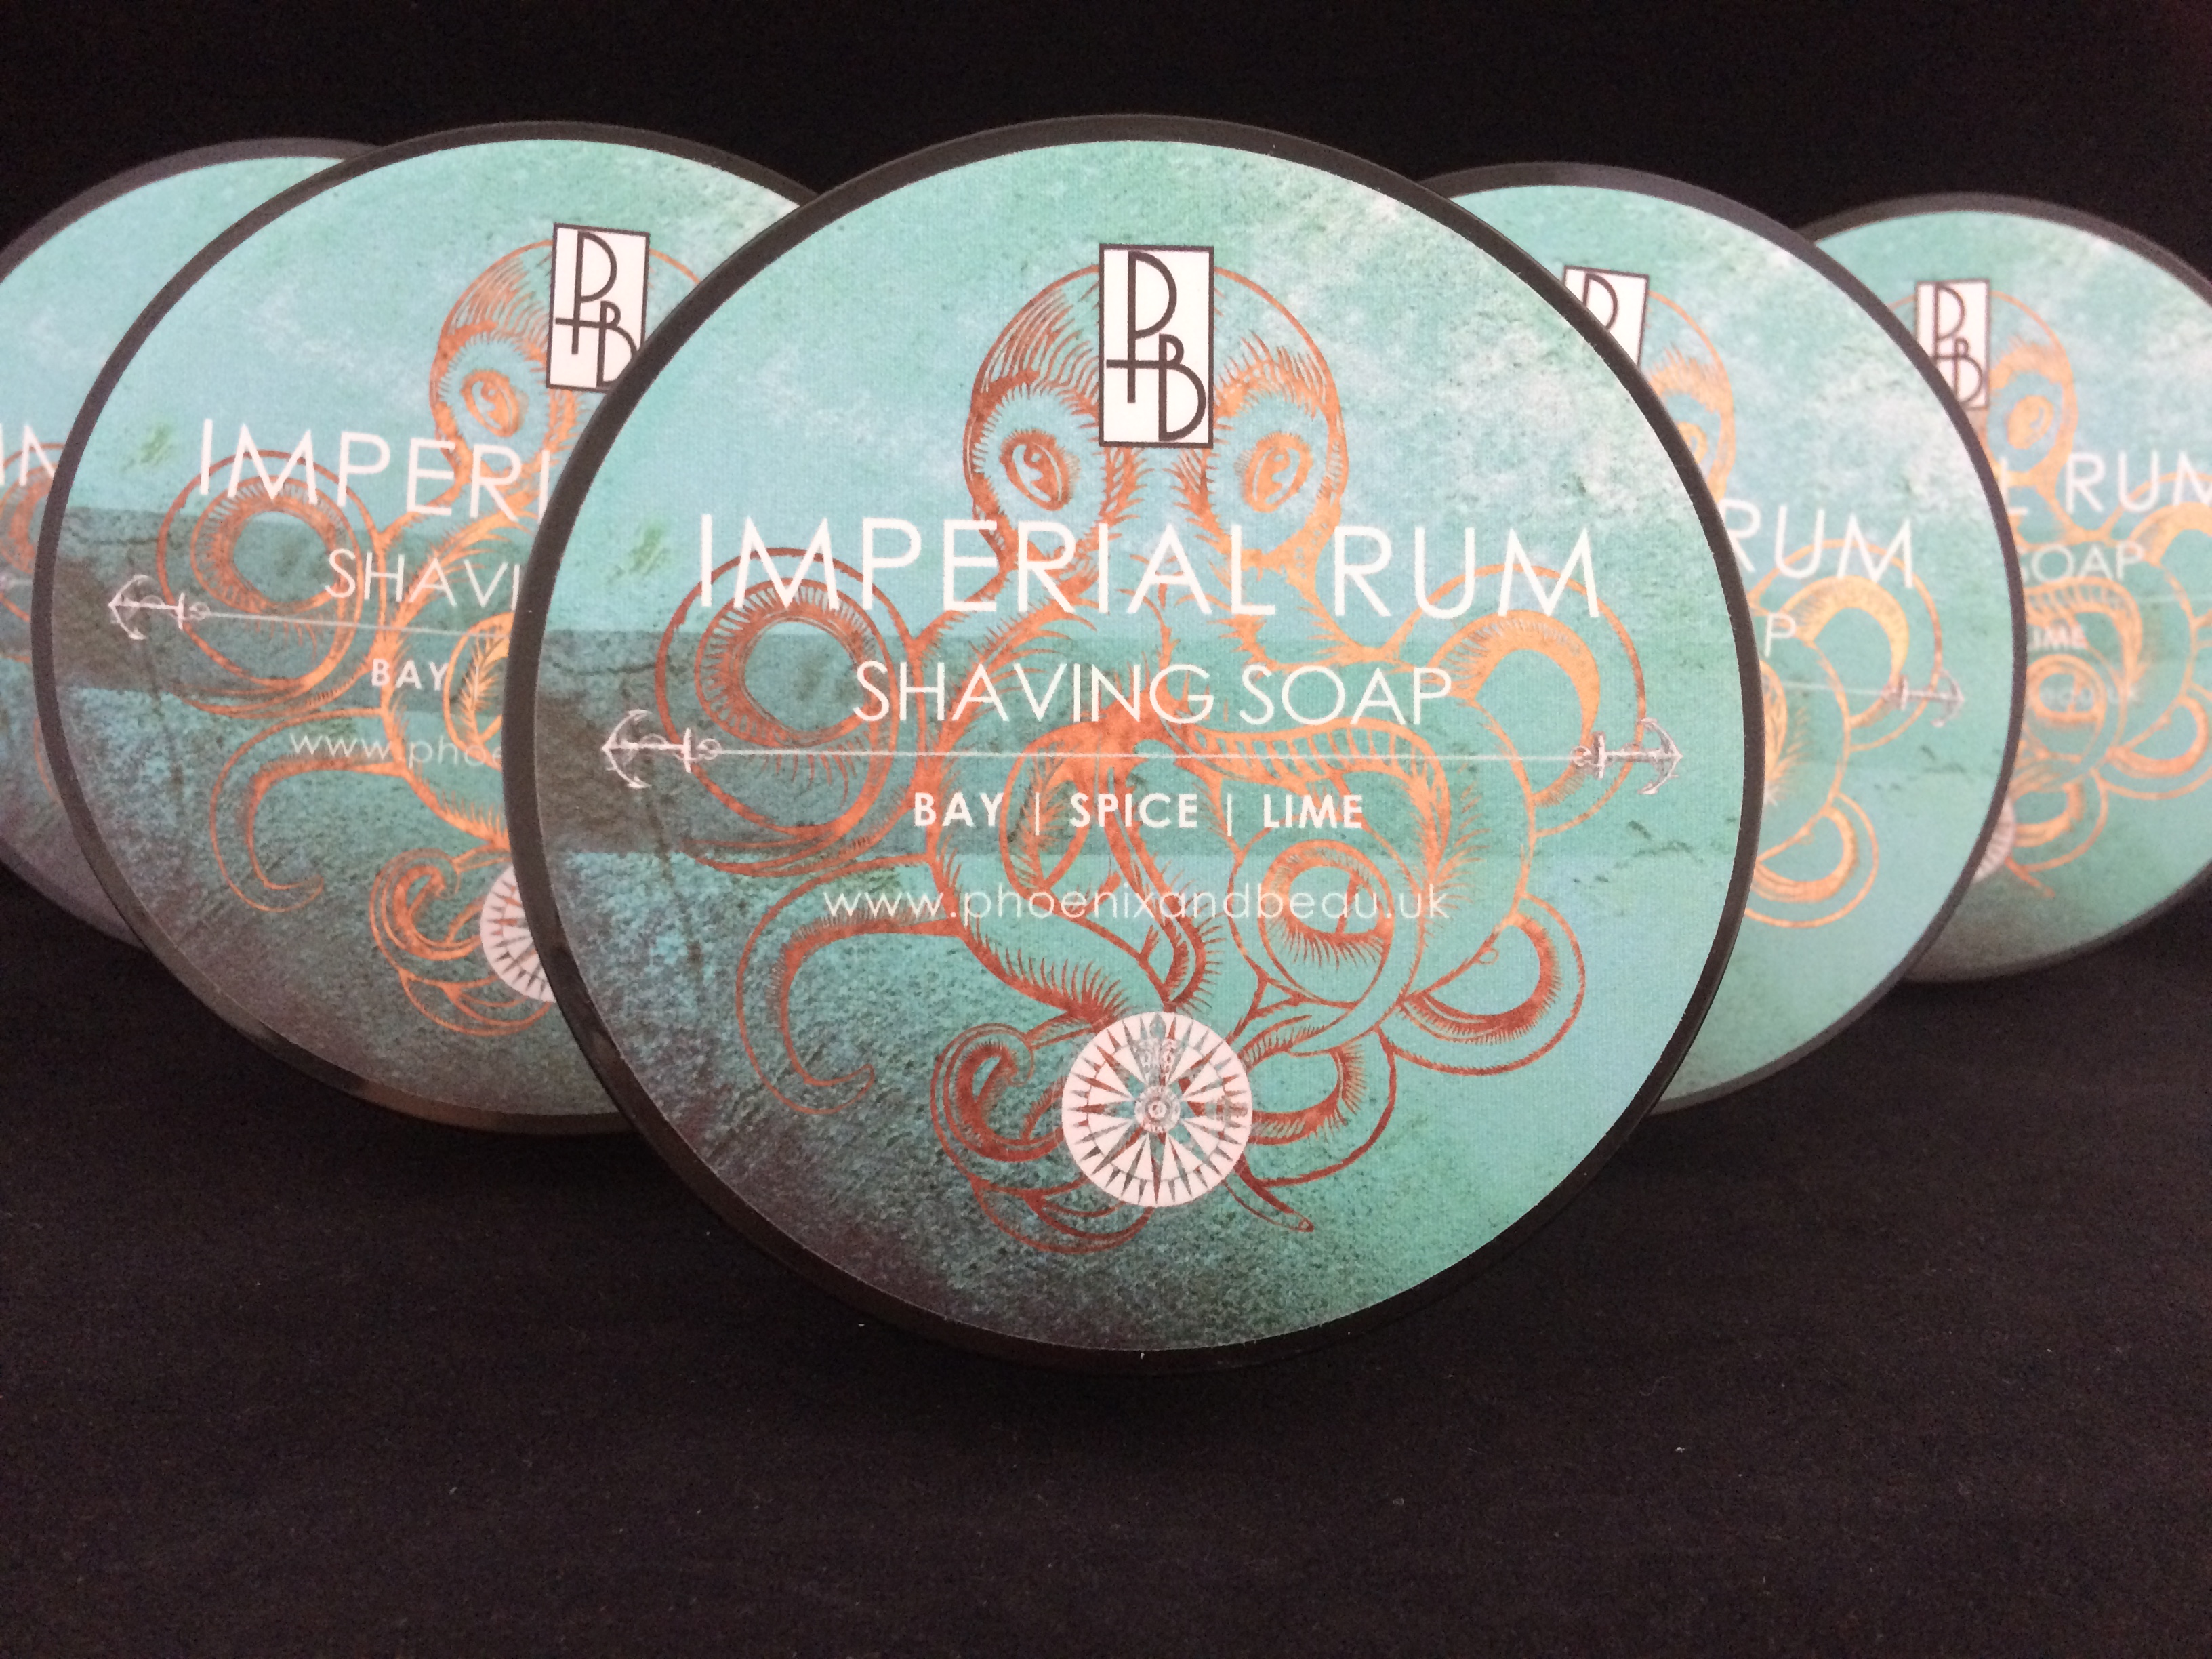 Phoenix & Beau Imperial Rum Shaving Soap | Agent Shave